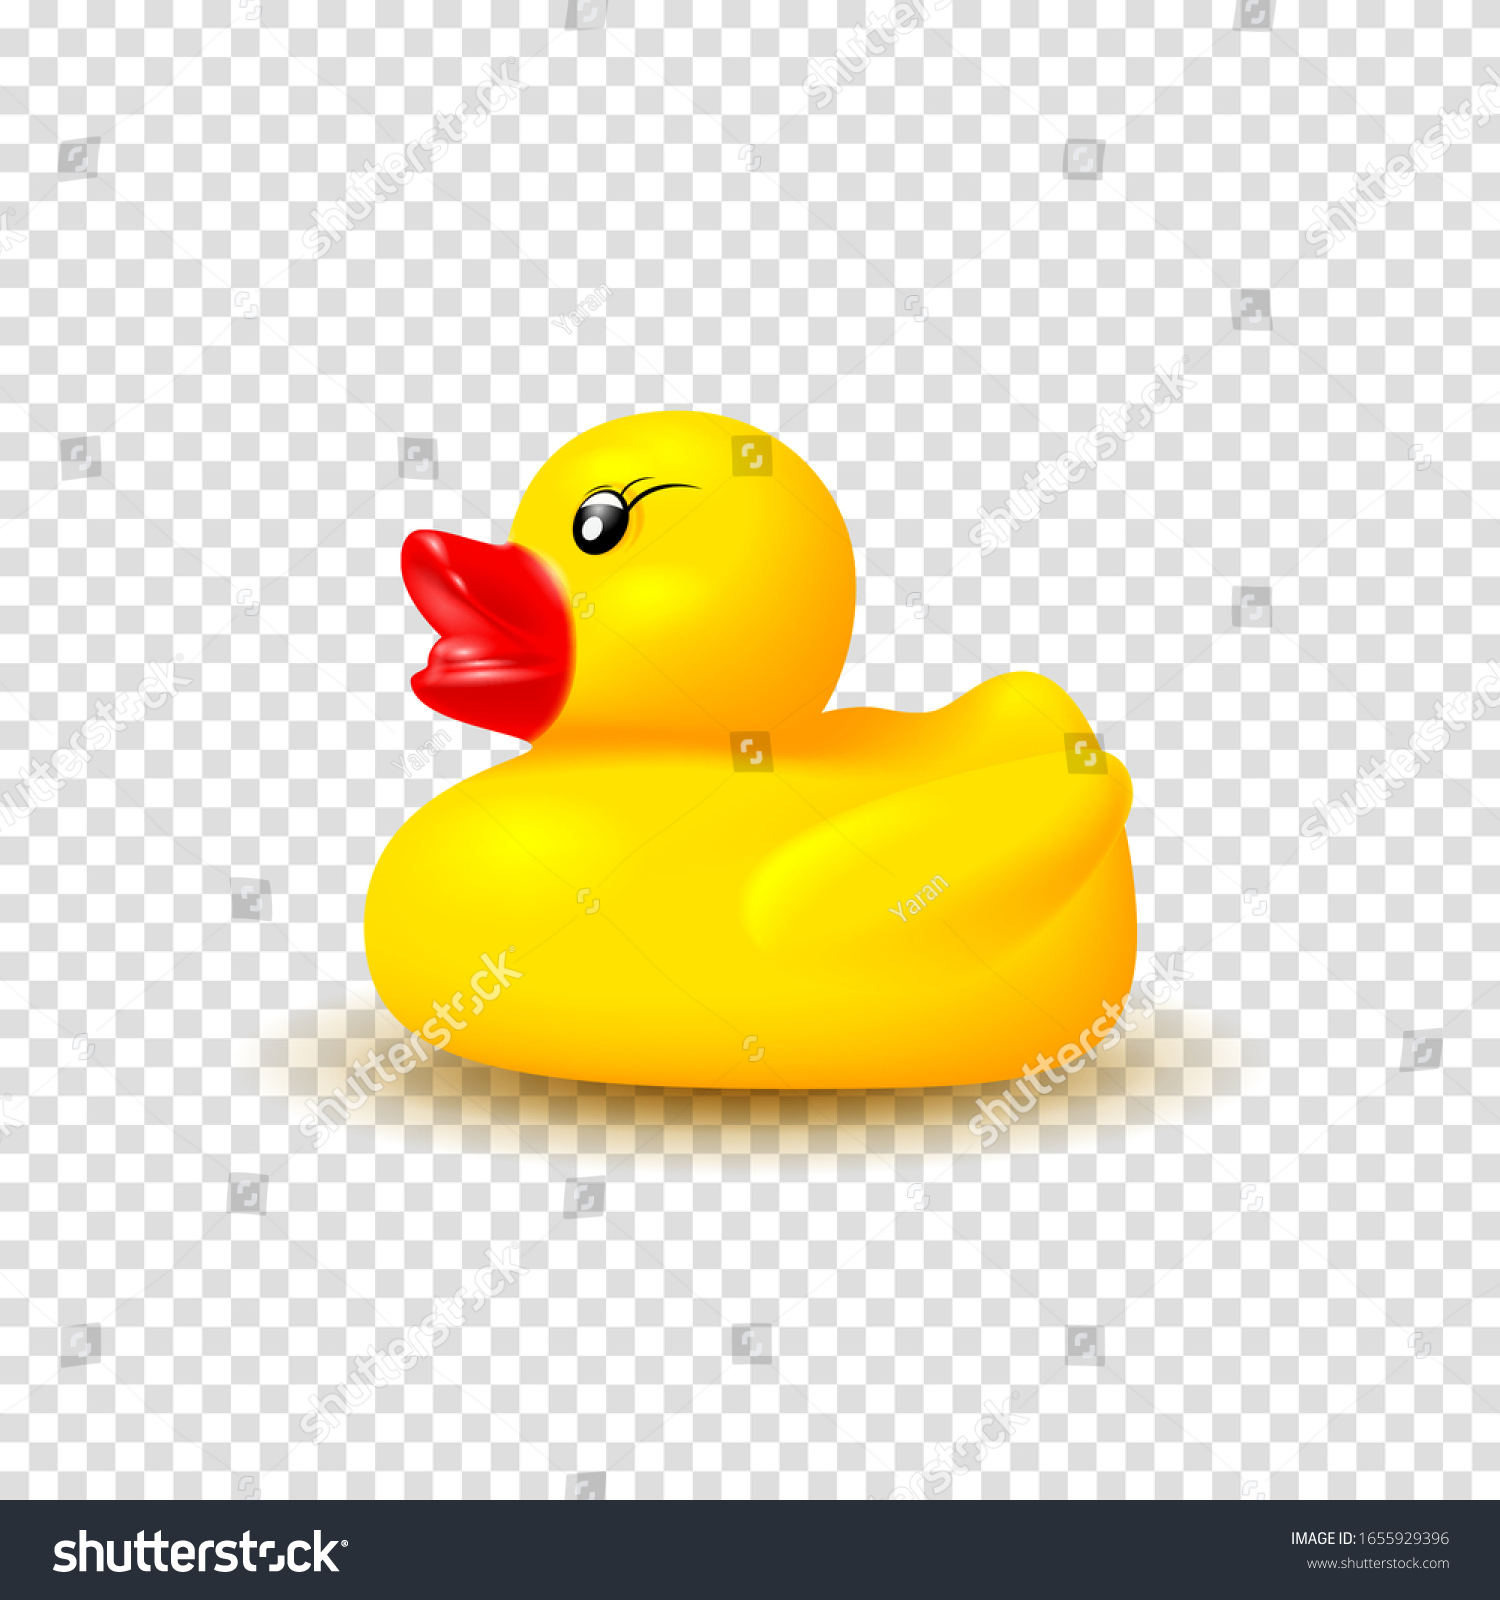 realistic rubber duck